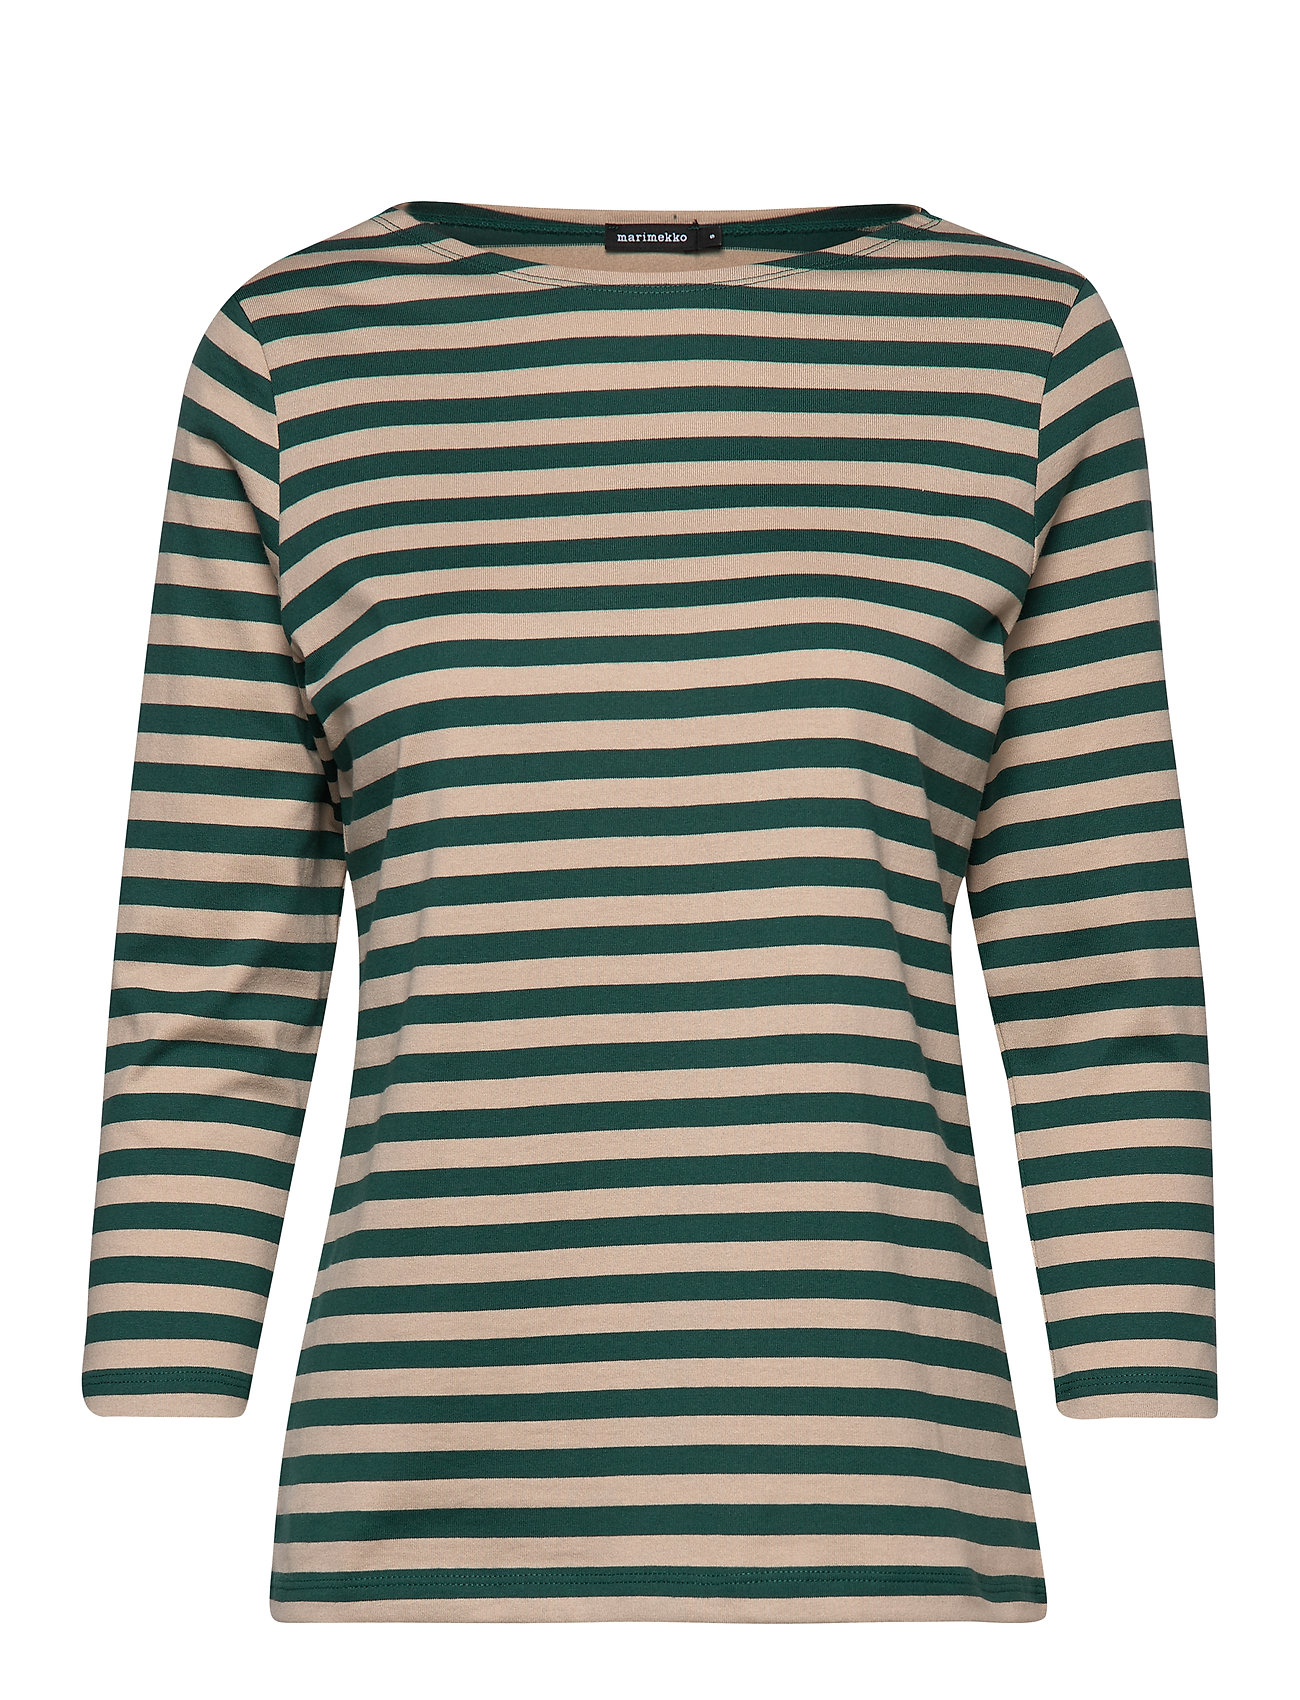 Ilma 2017 Shirt (Dark Green, Beige) (52.50 €) - Marimekko - | Boozt.com